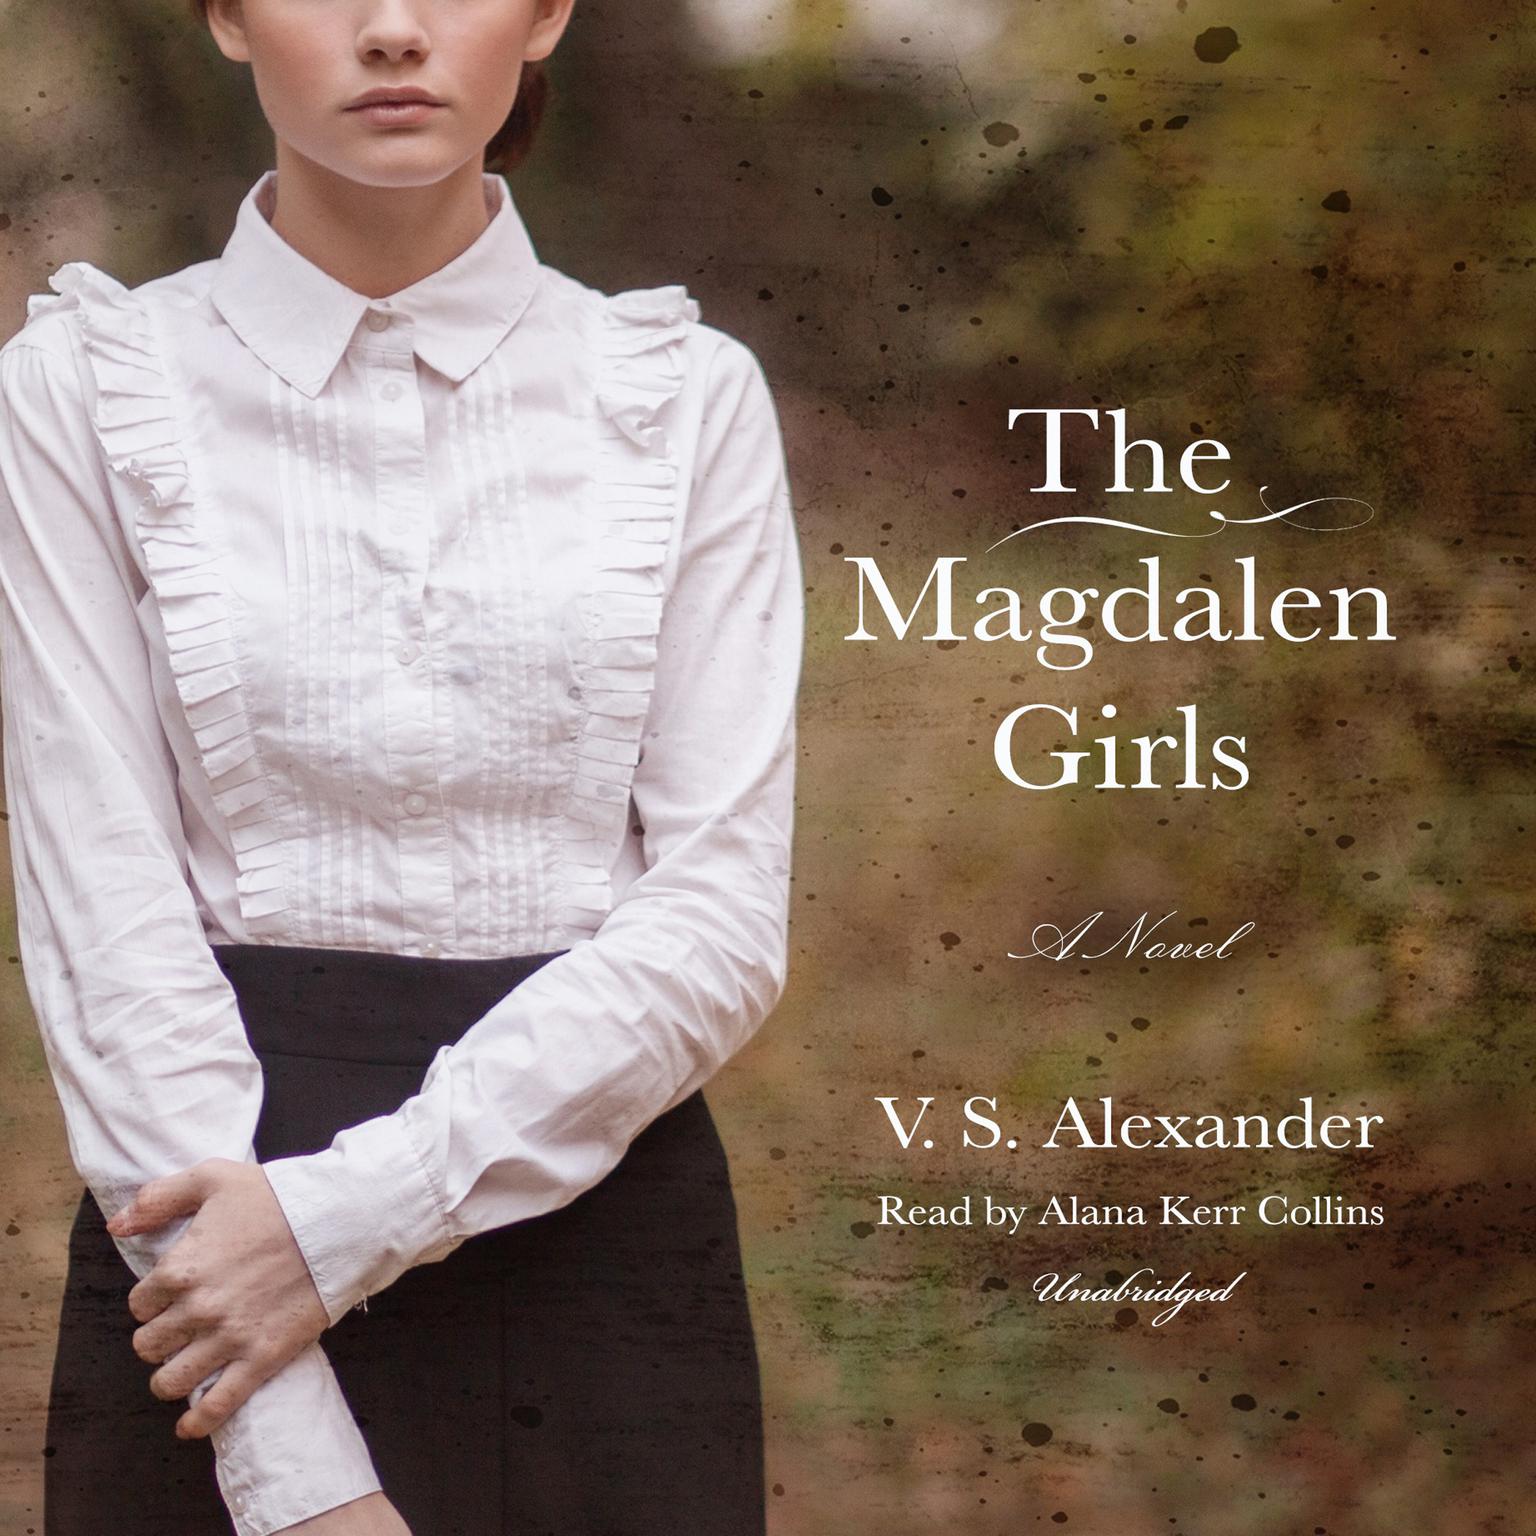 The Magdalen Girls Audiobook, by V. S. Alexander